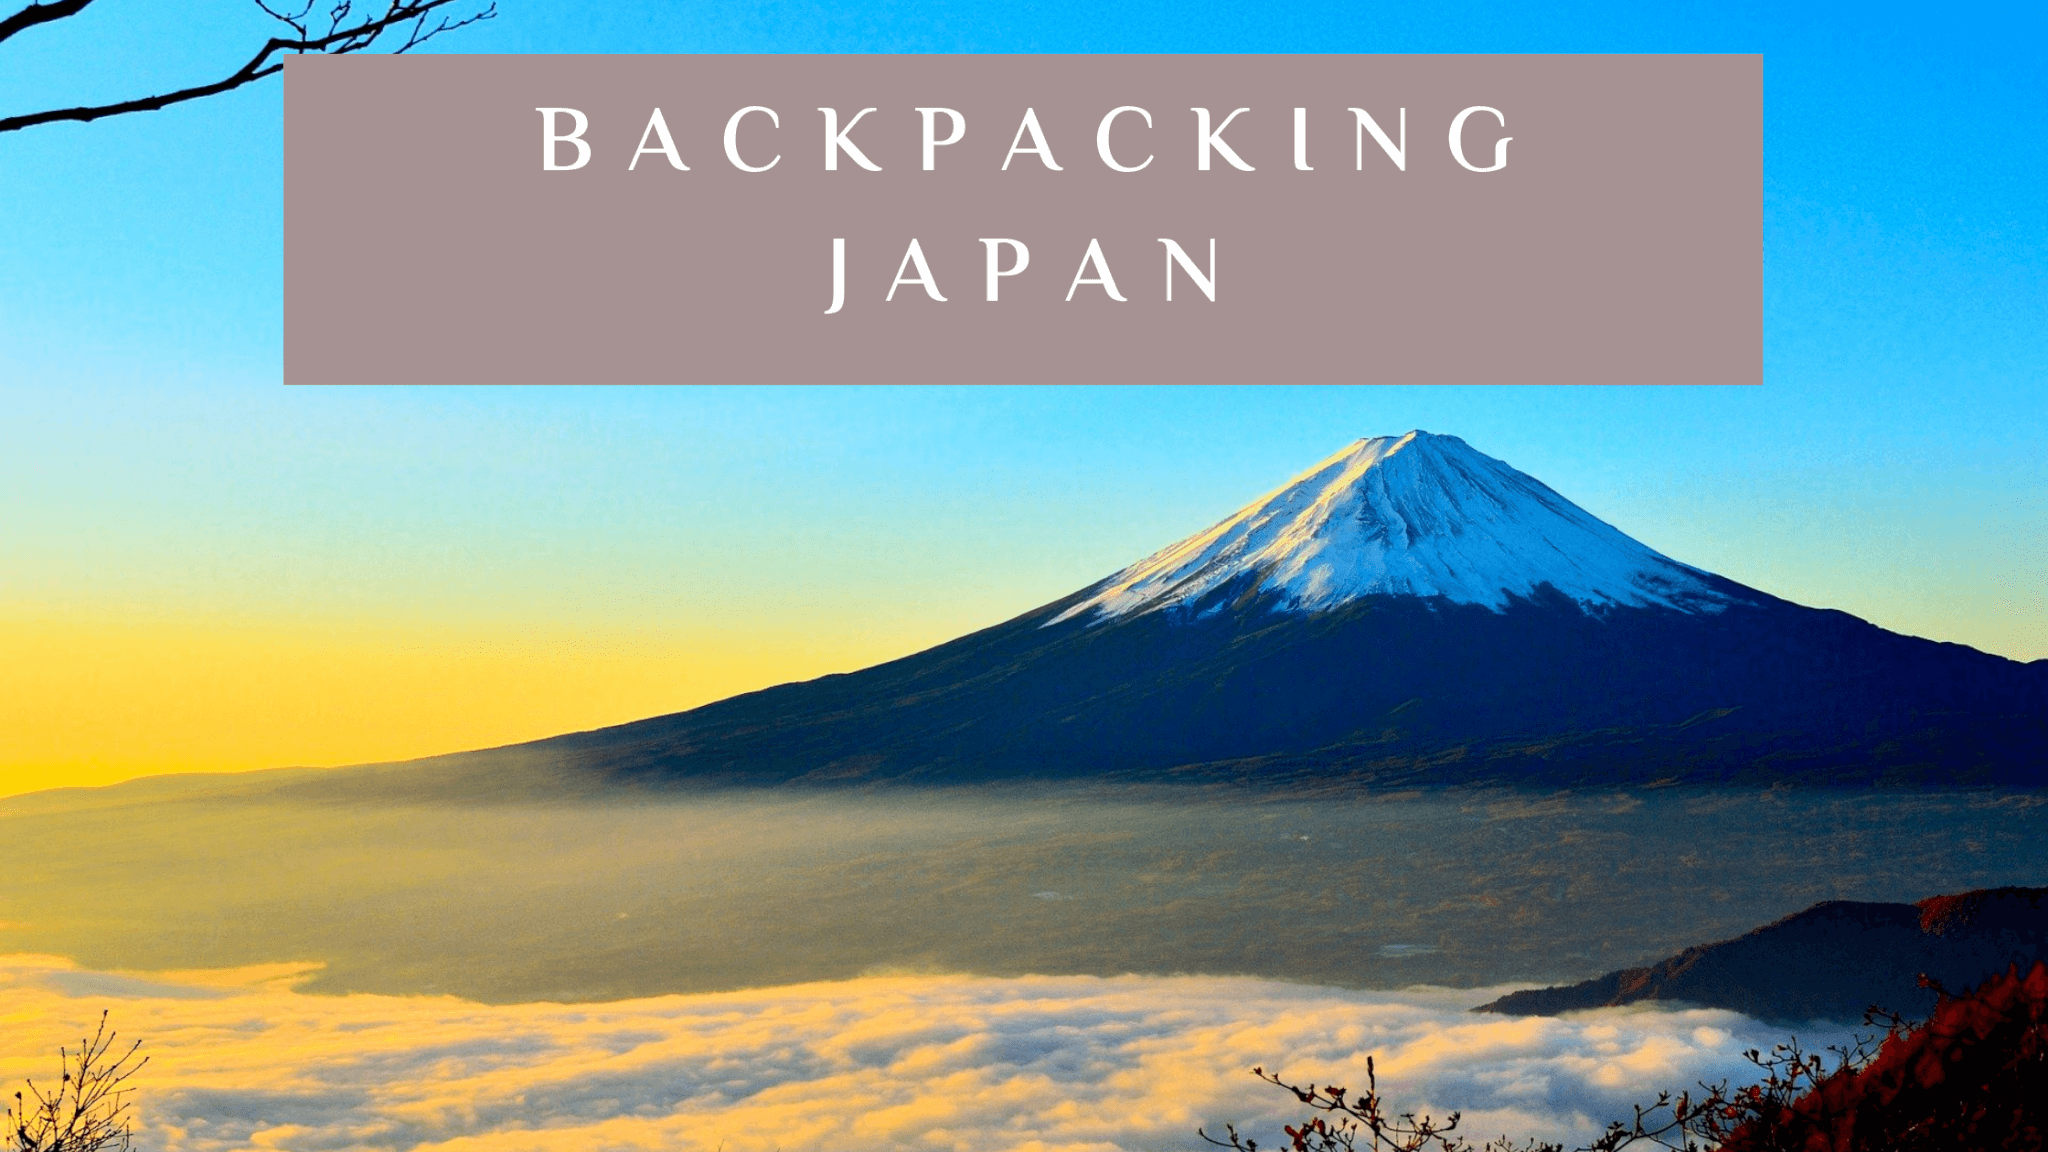 Backpacking Japan - 6